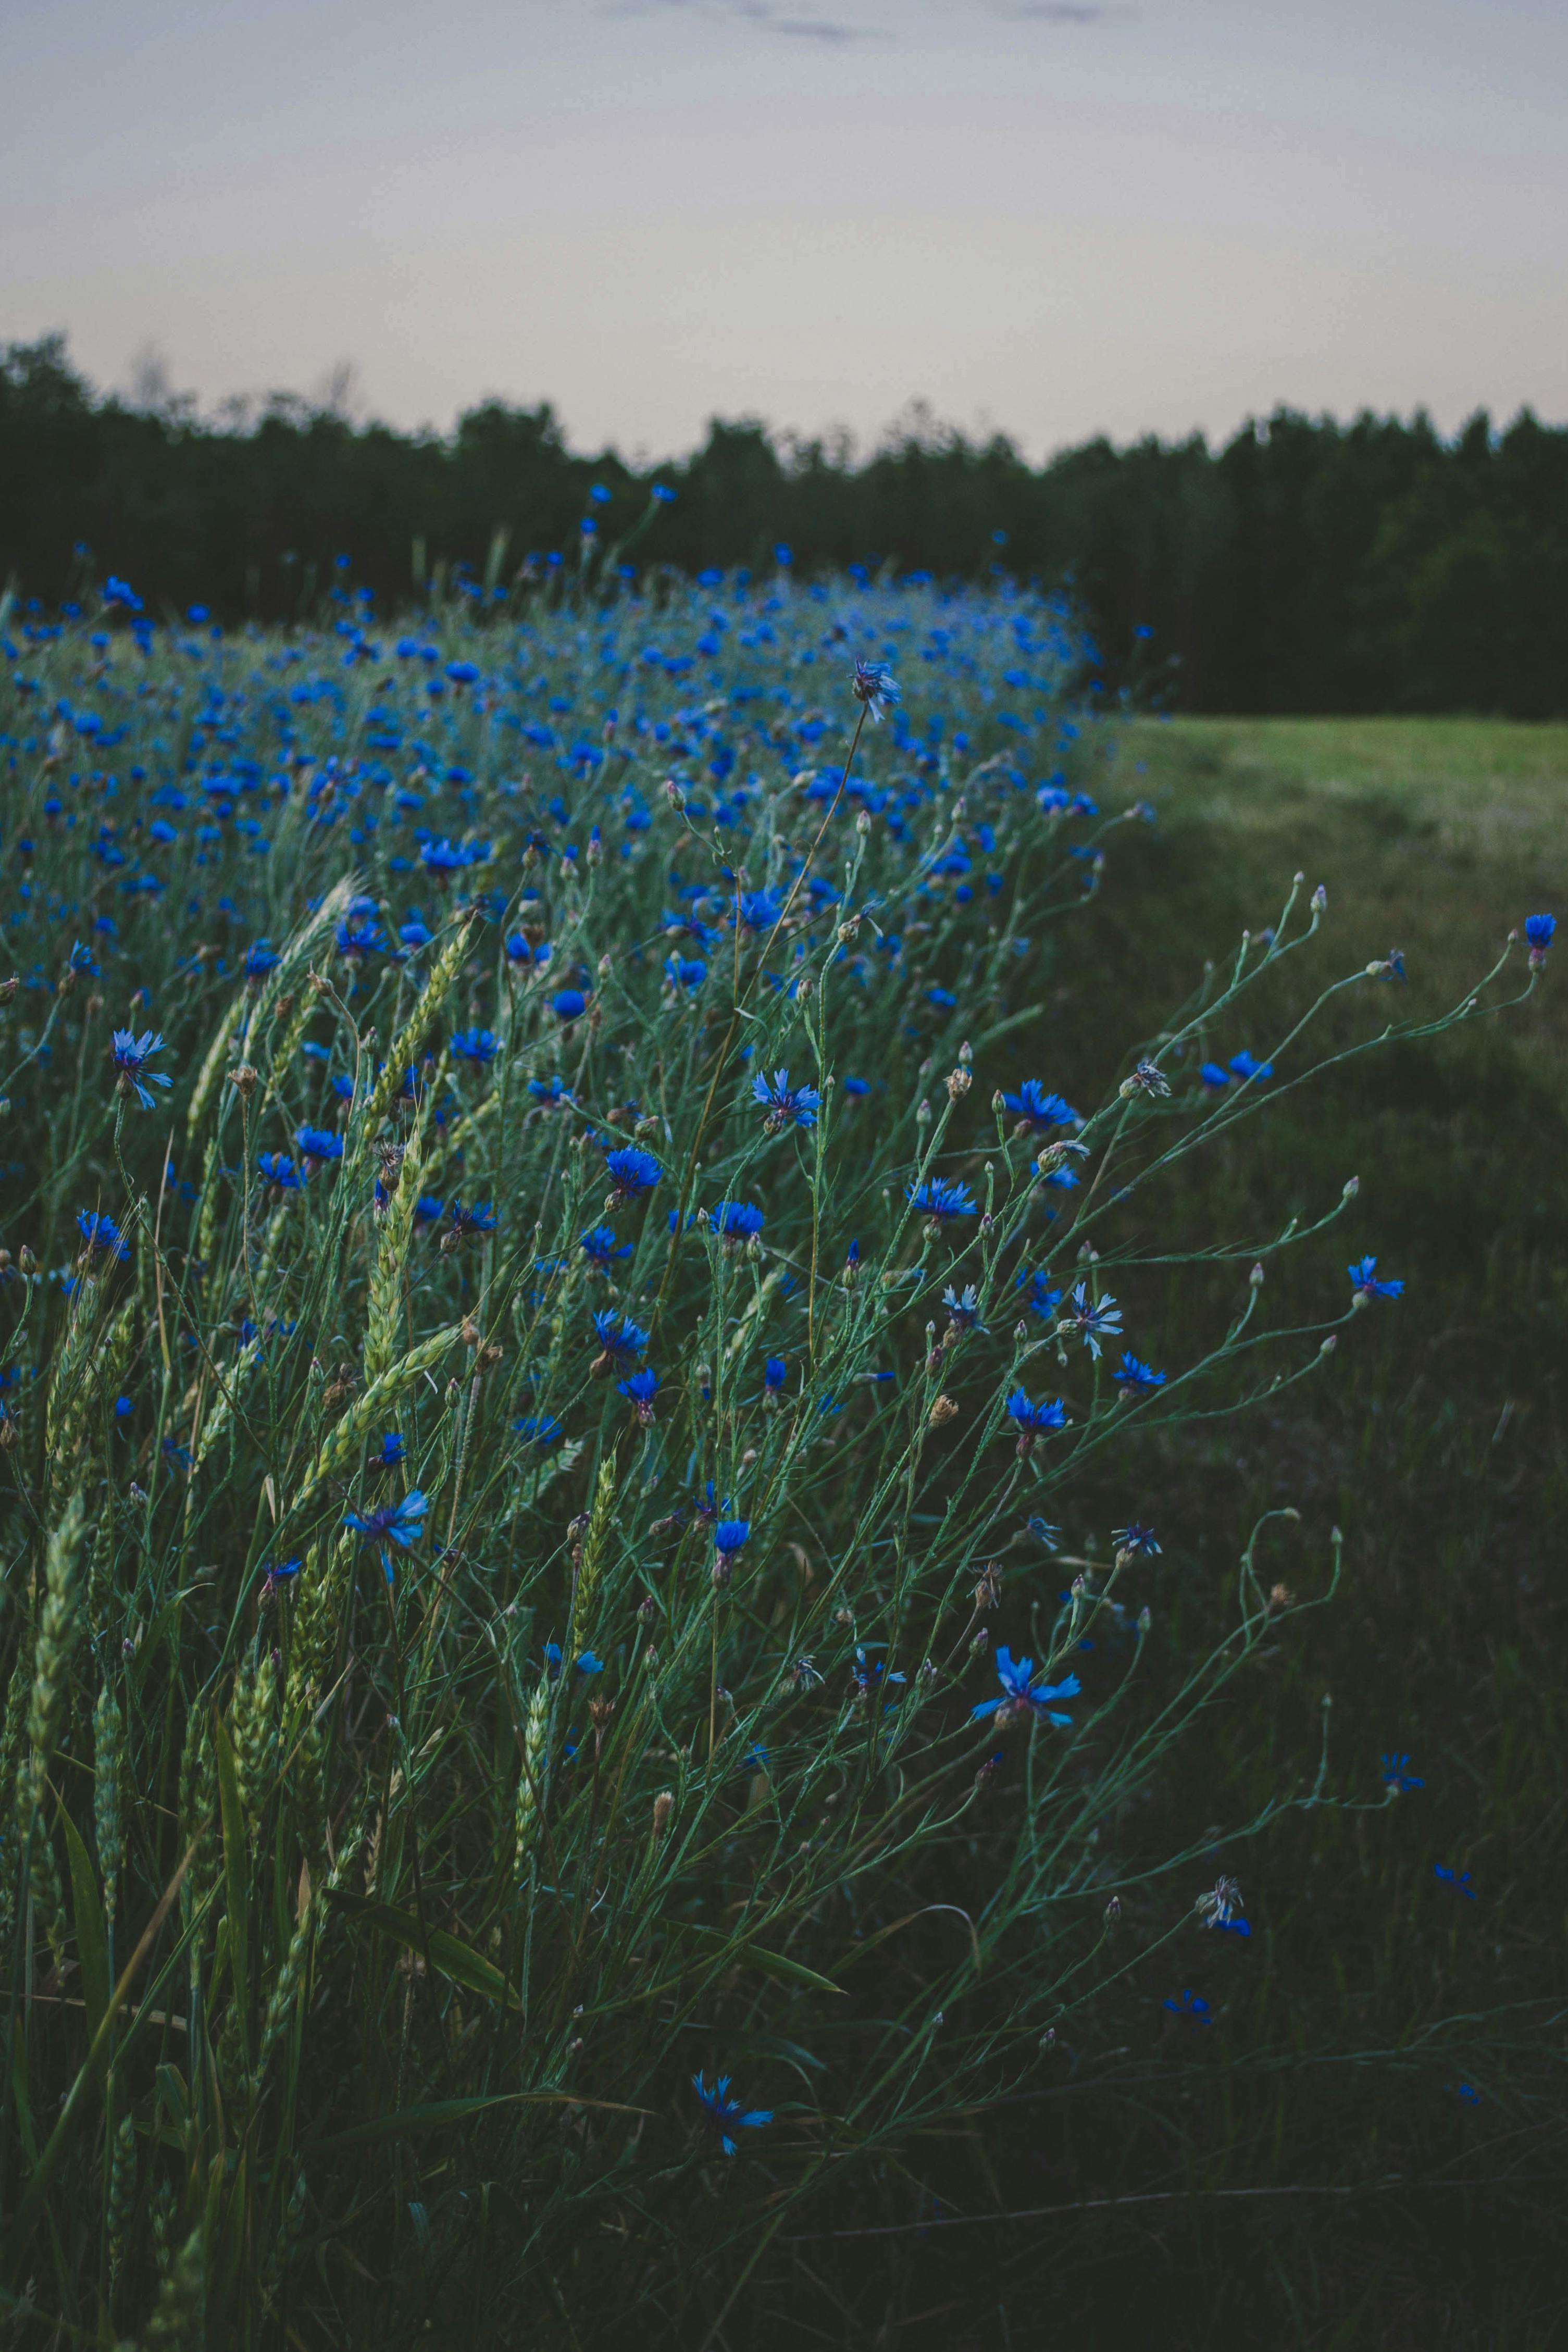 Blue Flower Wallpaper Images  Free Download on Freepik